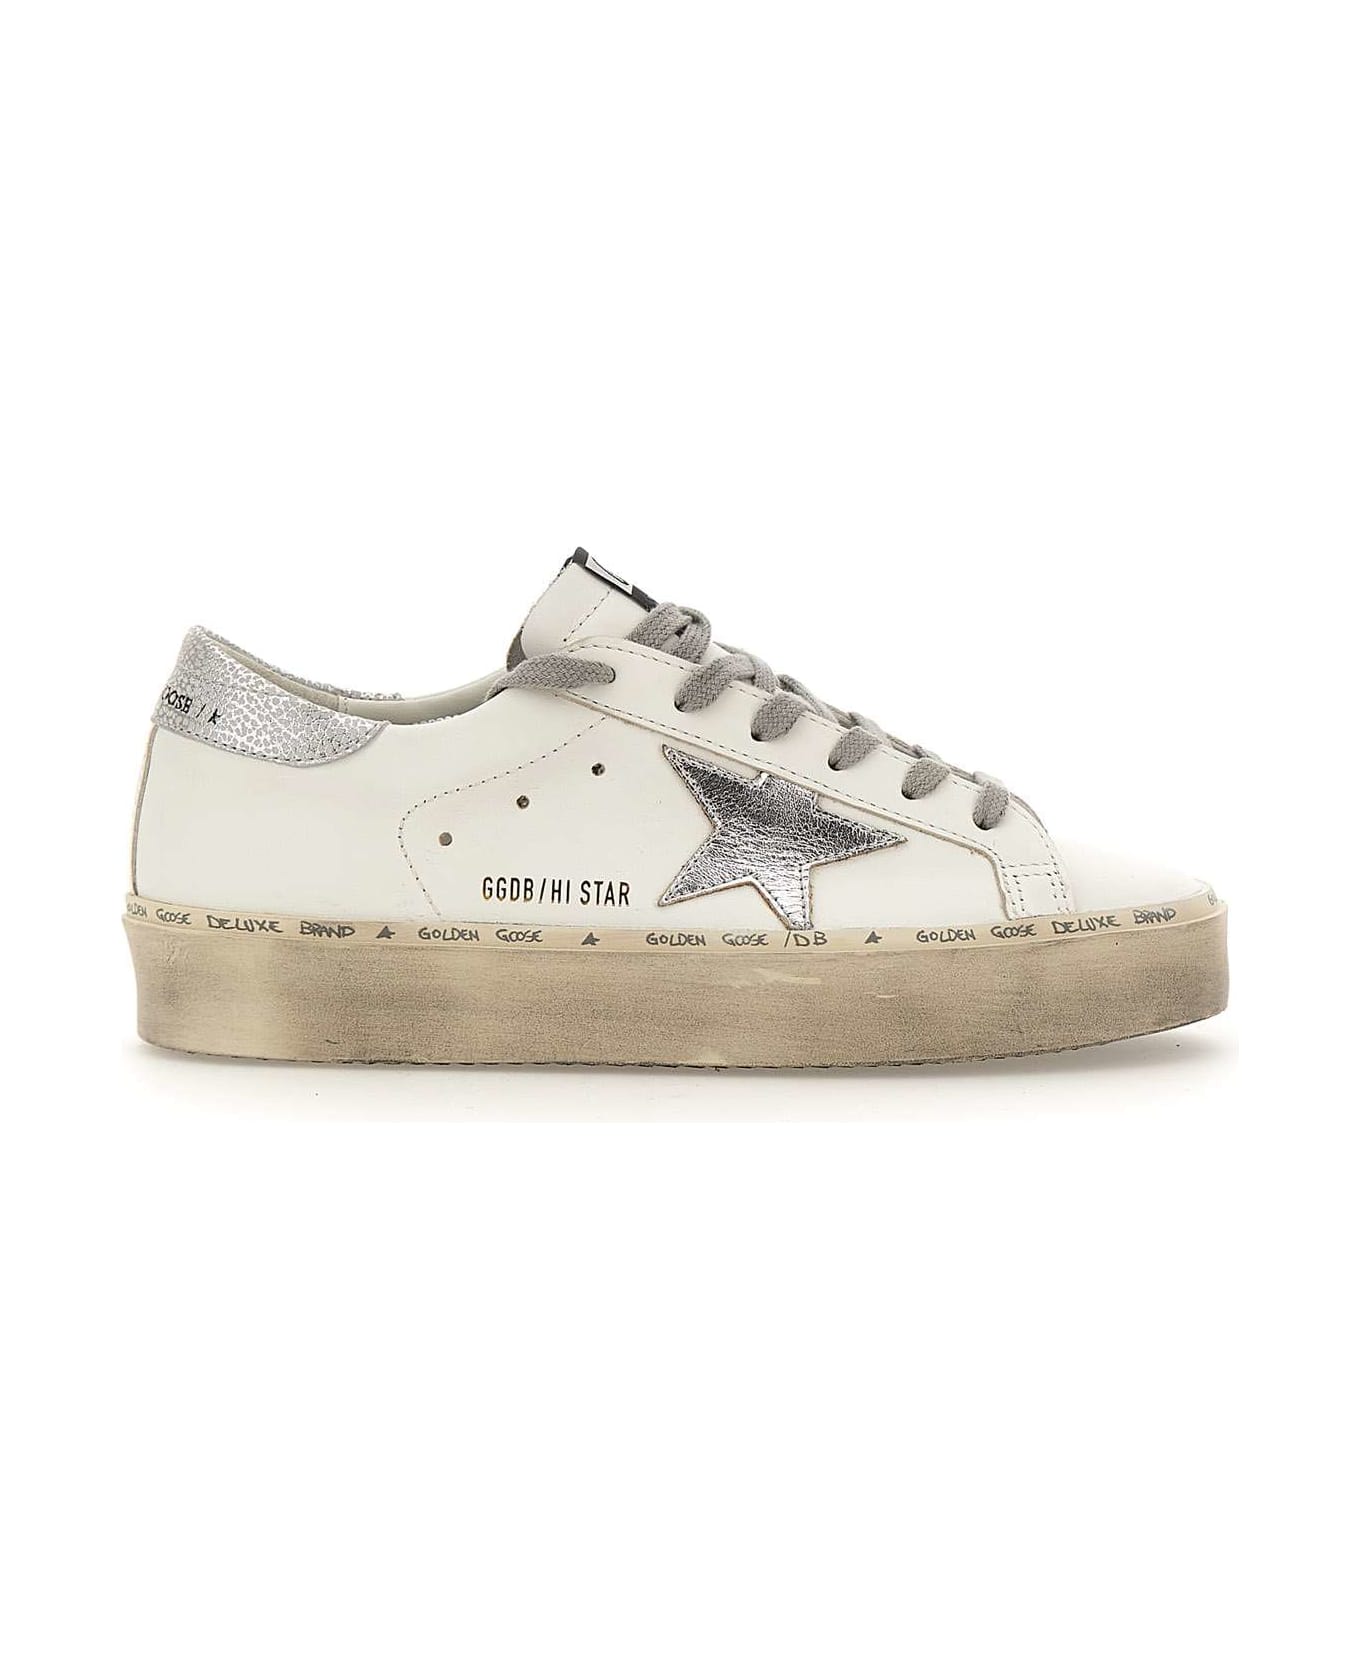 Golden Goose Hi Star Sneakers - White/Silver